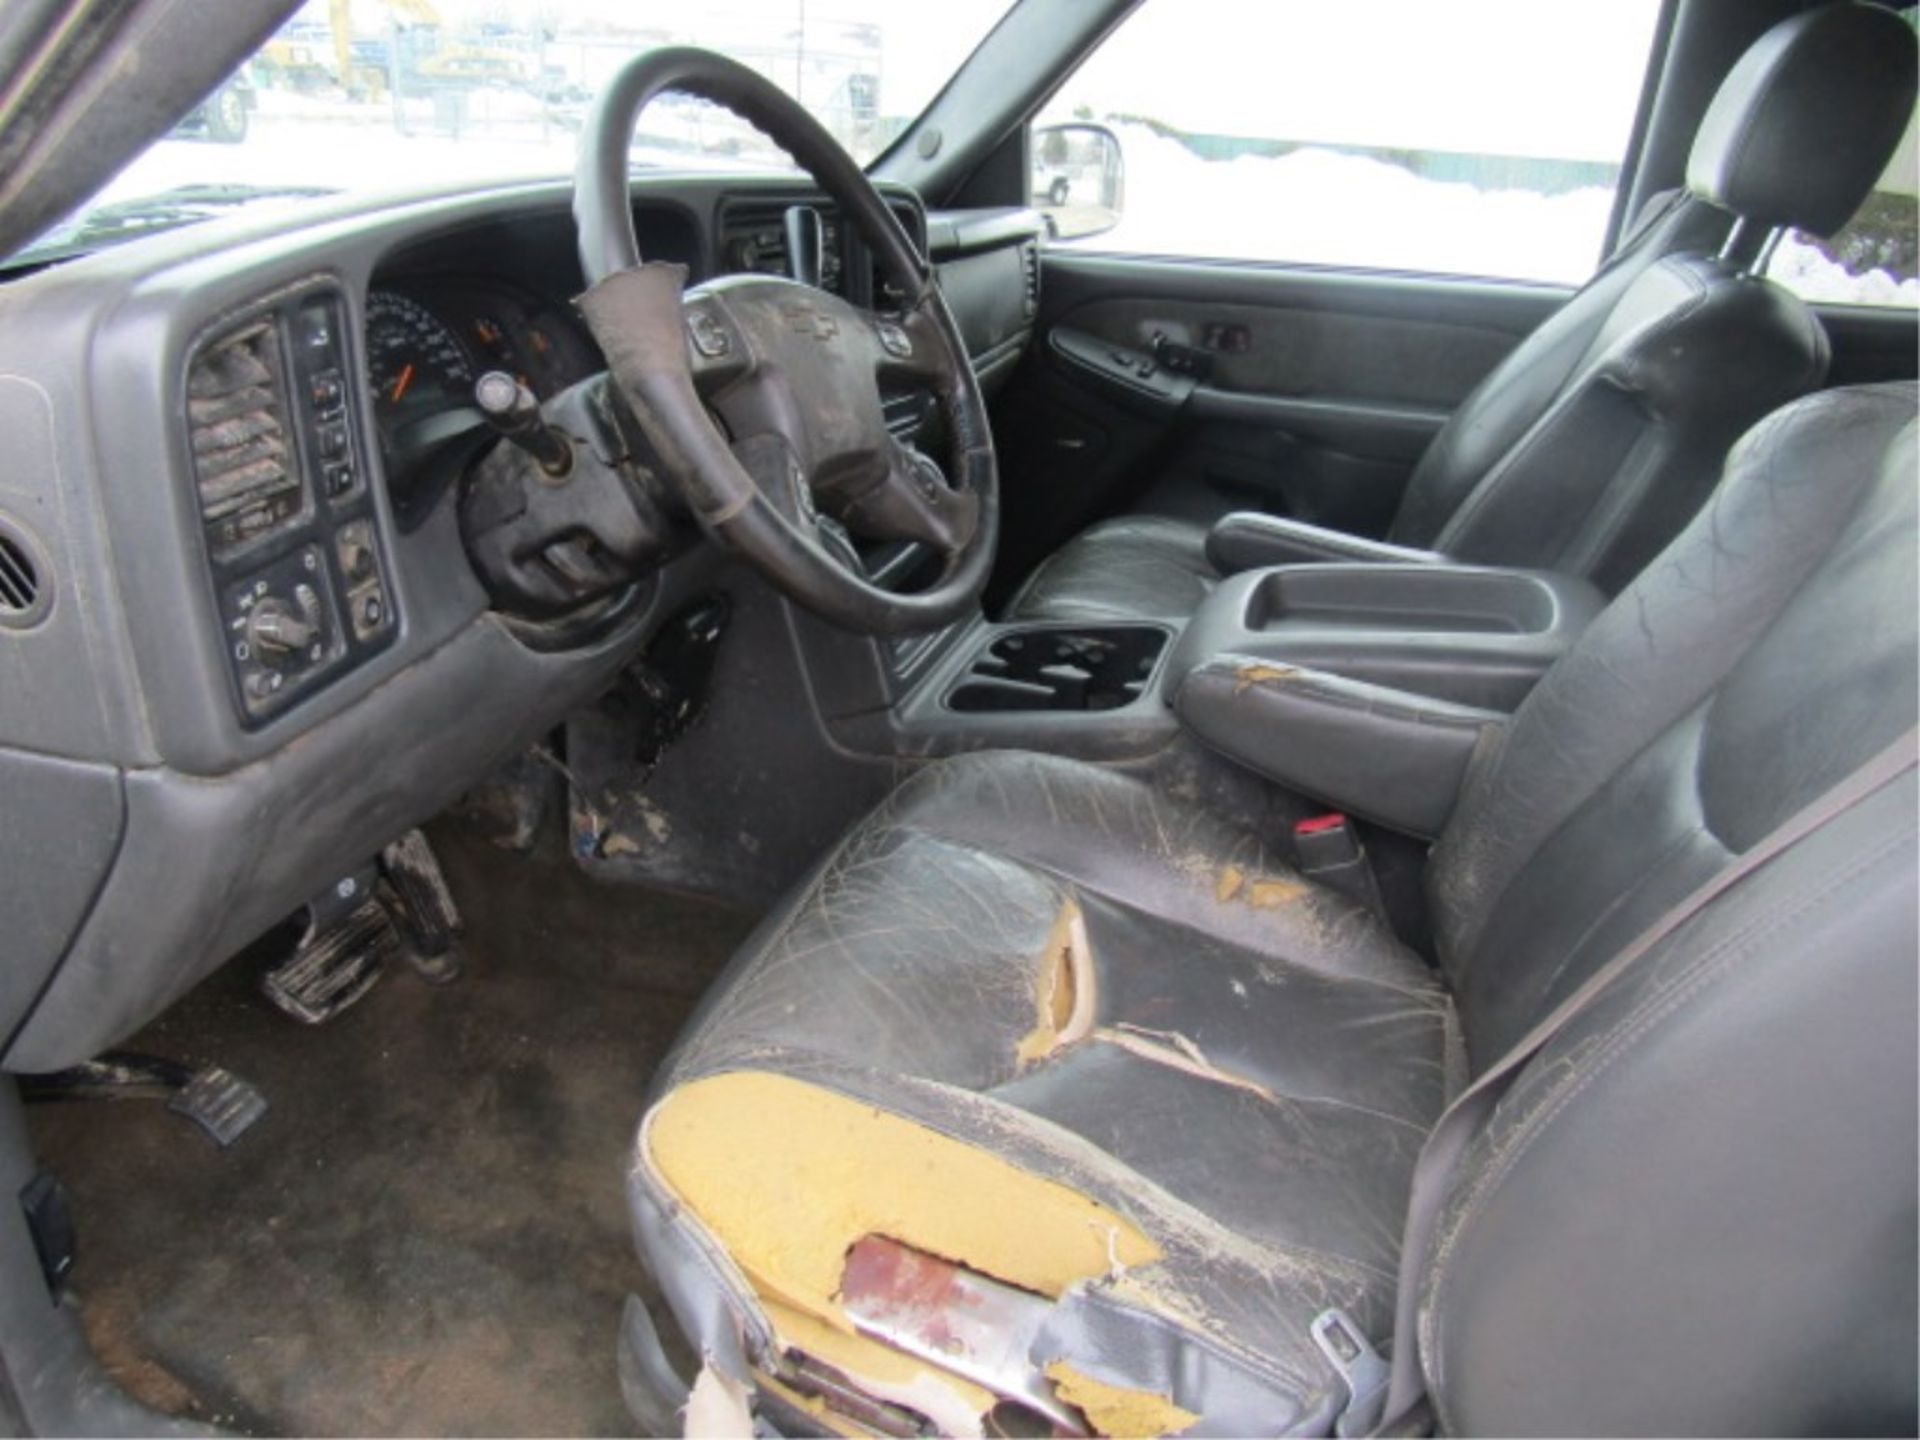 2003 Chevy Silverado K2500HD Crew Cab 4x4 Truck, Vin#1GCHK23183F172596, Automatic 4x4 - Image 13 of 20